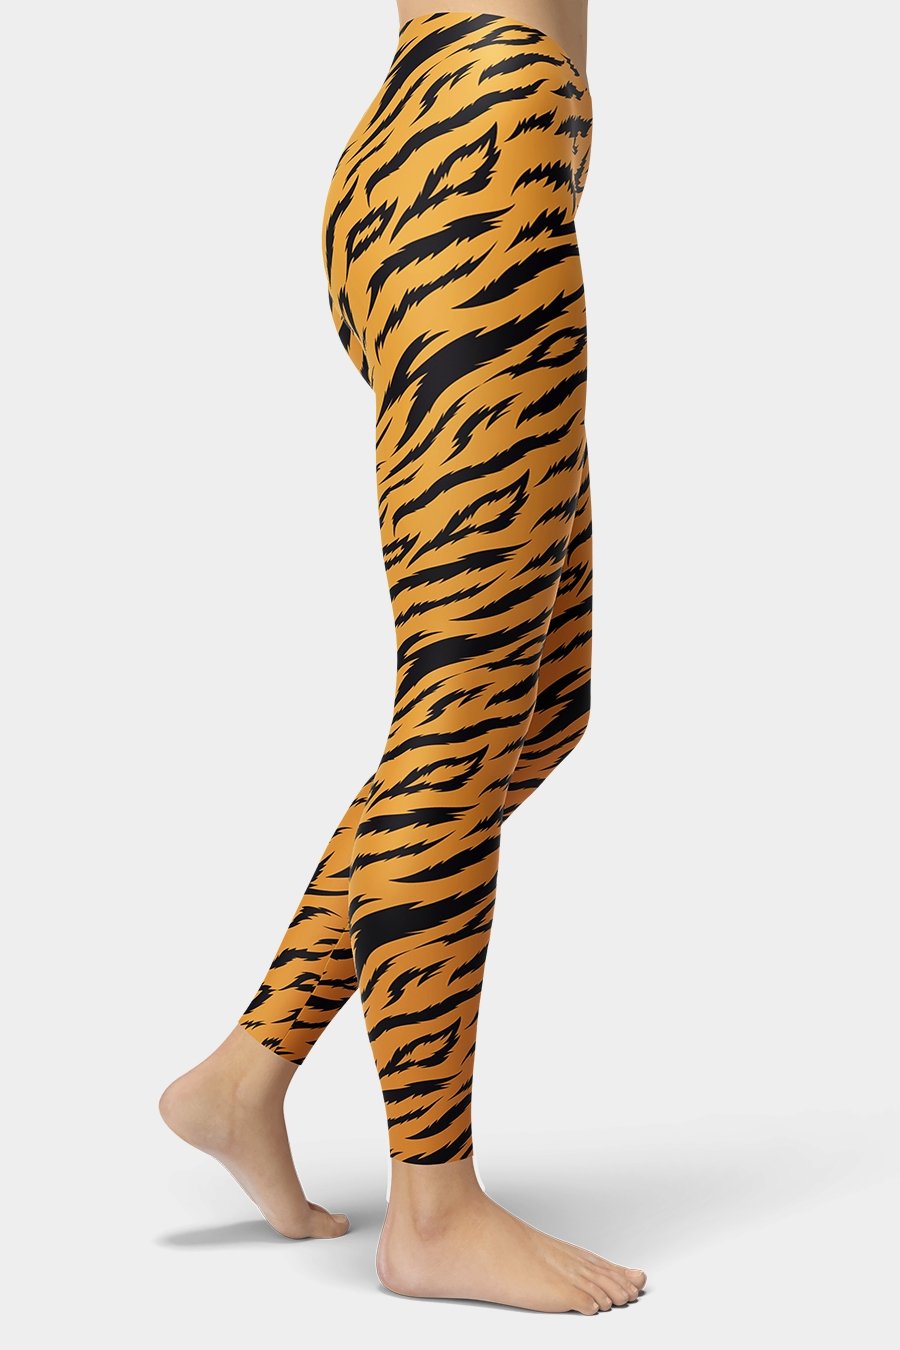 Tiger Skin Leggings - SeeMyLeggings